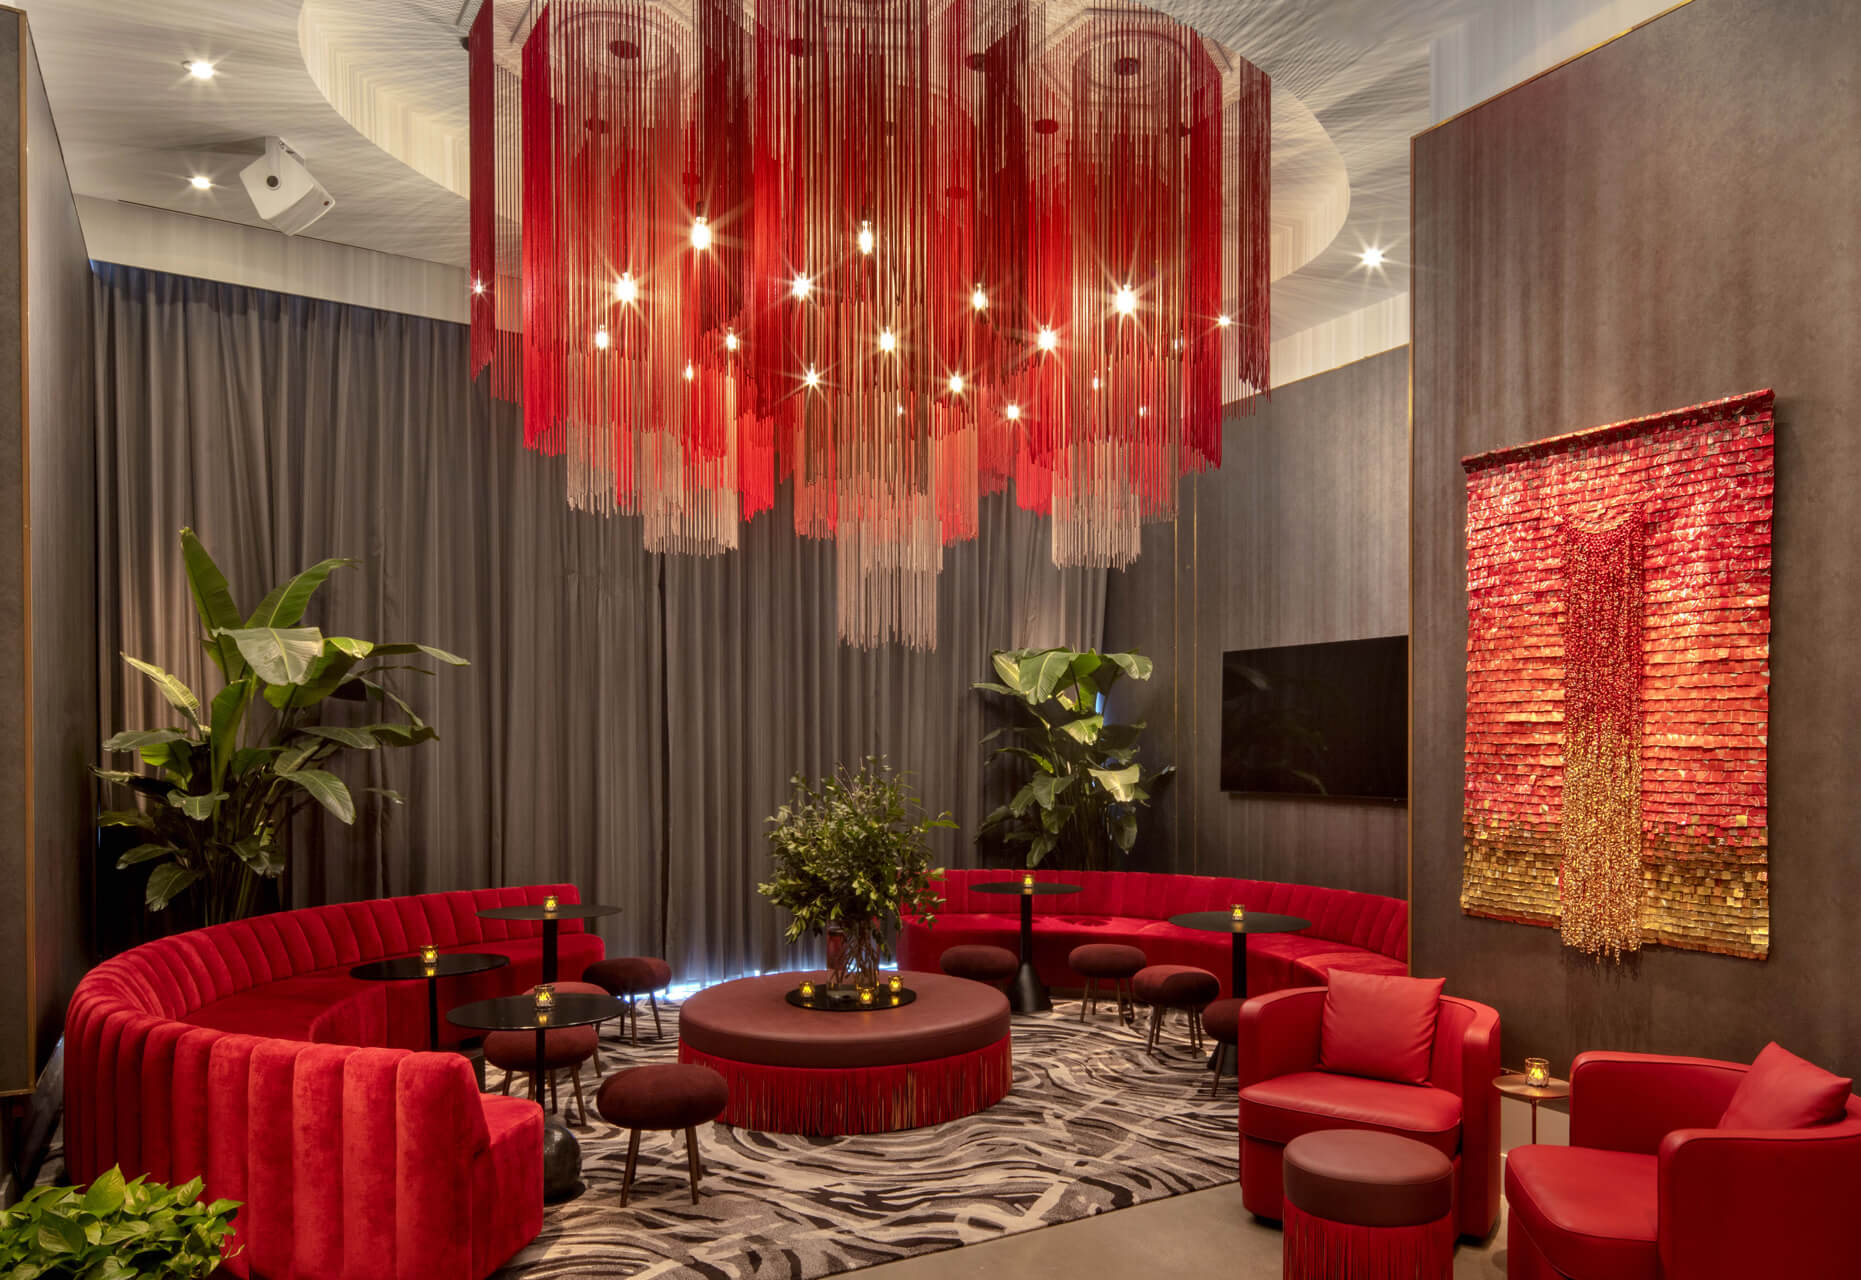 Virgin New York Hotel designed by Mark Zeff